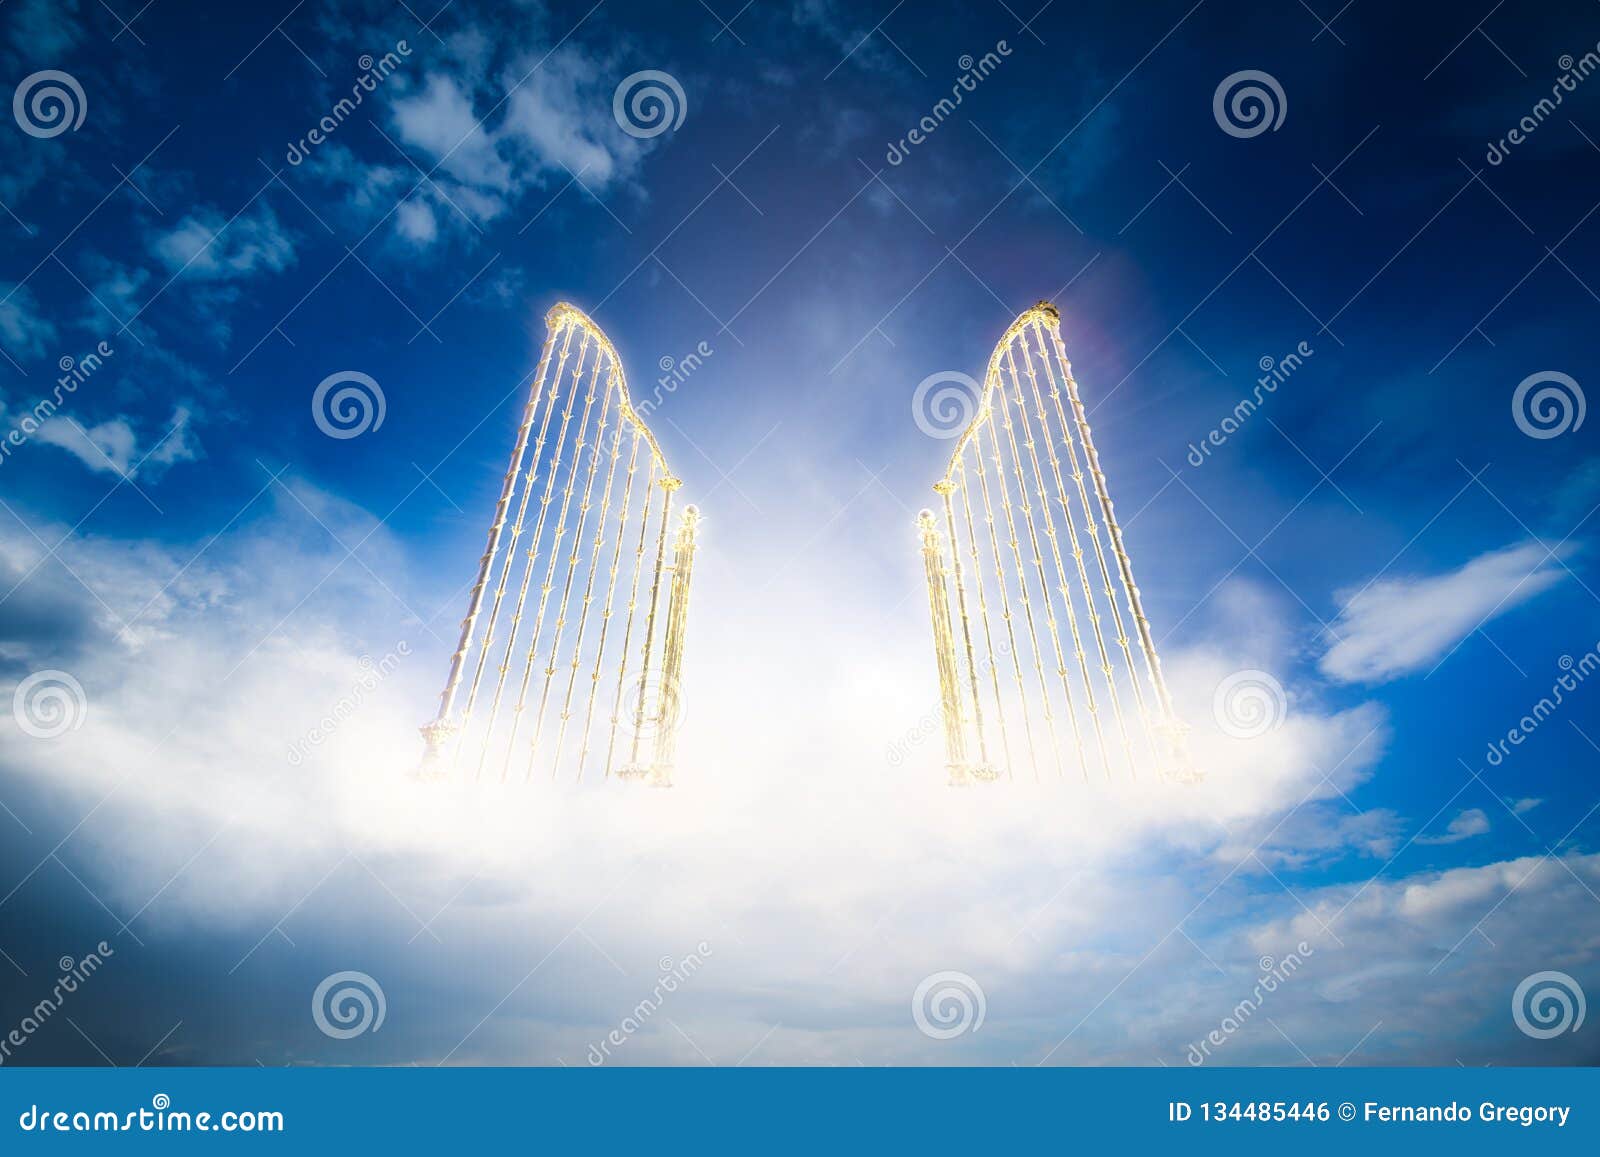 gold heavens gate in the sky / 3d 